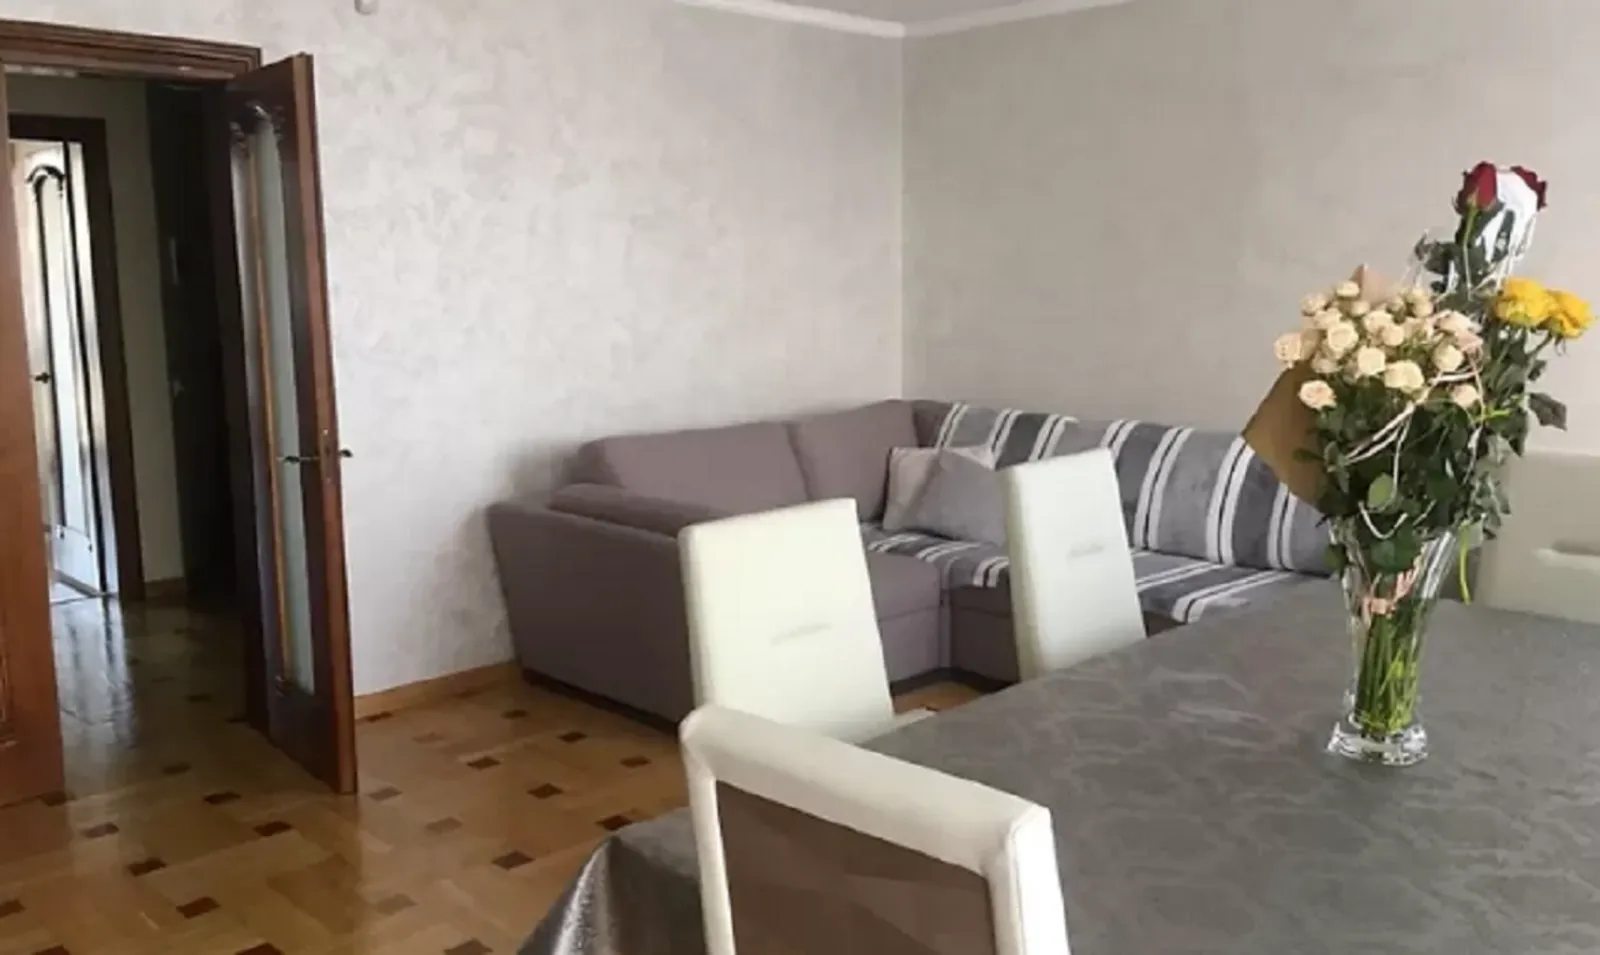 House for sale. 290 m², 3 floors. Rusanivka, Baykovtsy. 